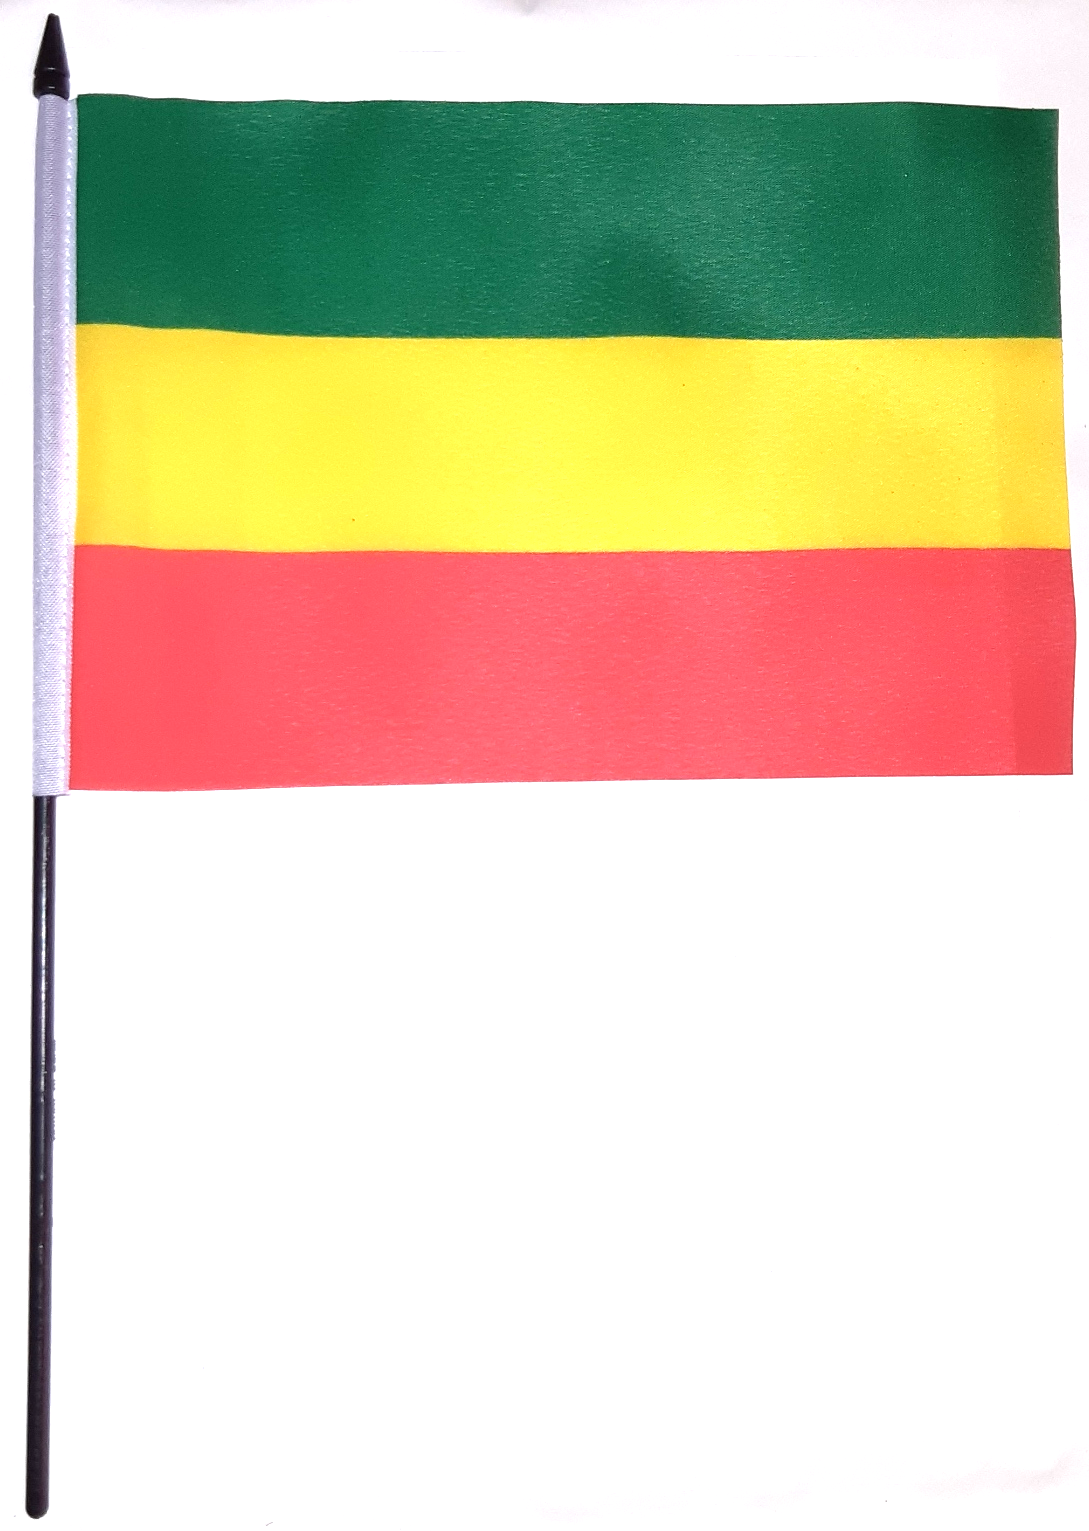 ETIOPIEN HANDFLAGGA 23X15CM